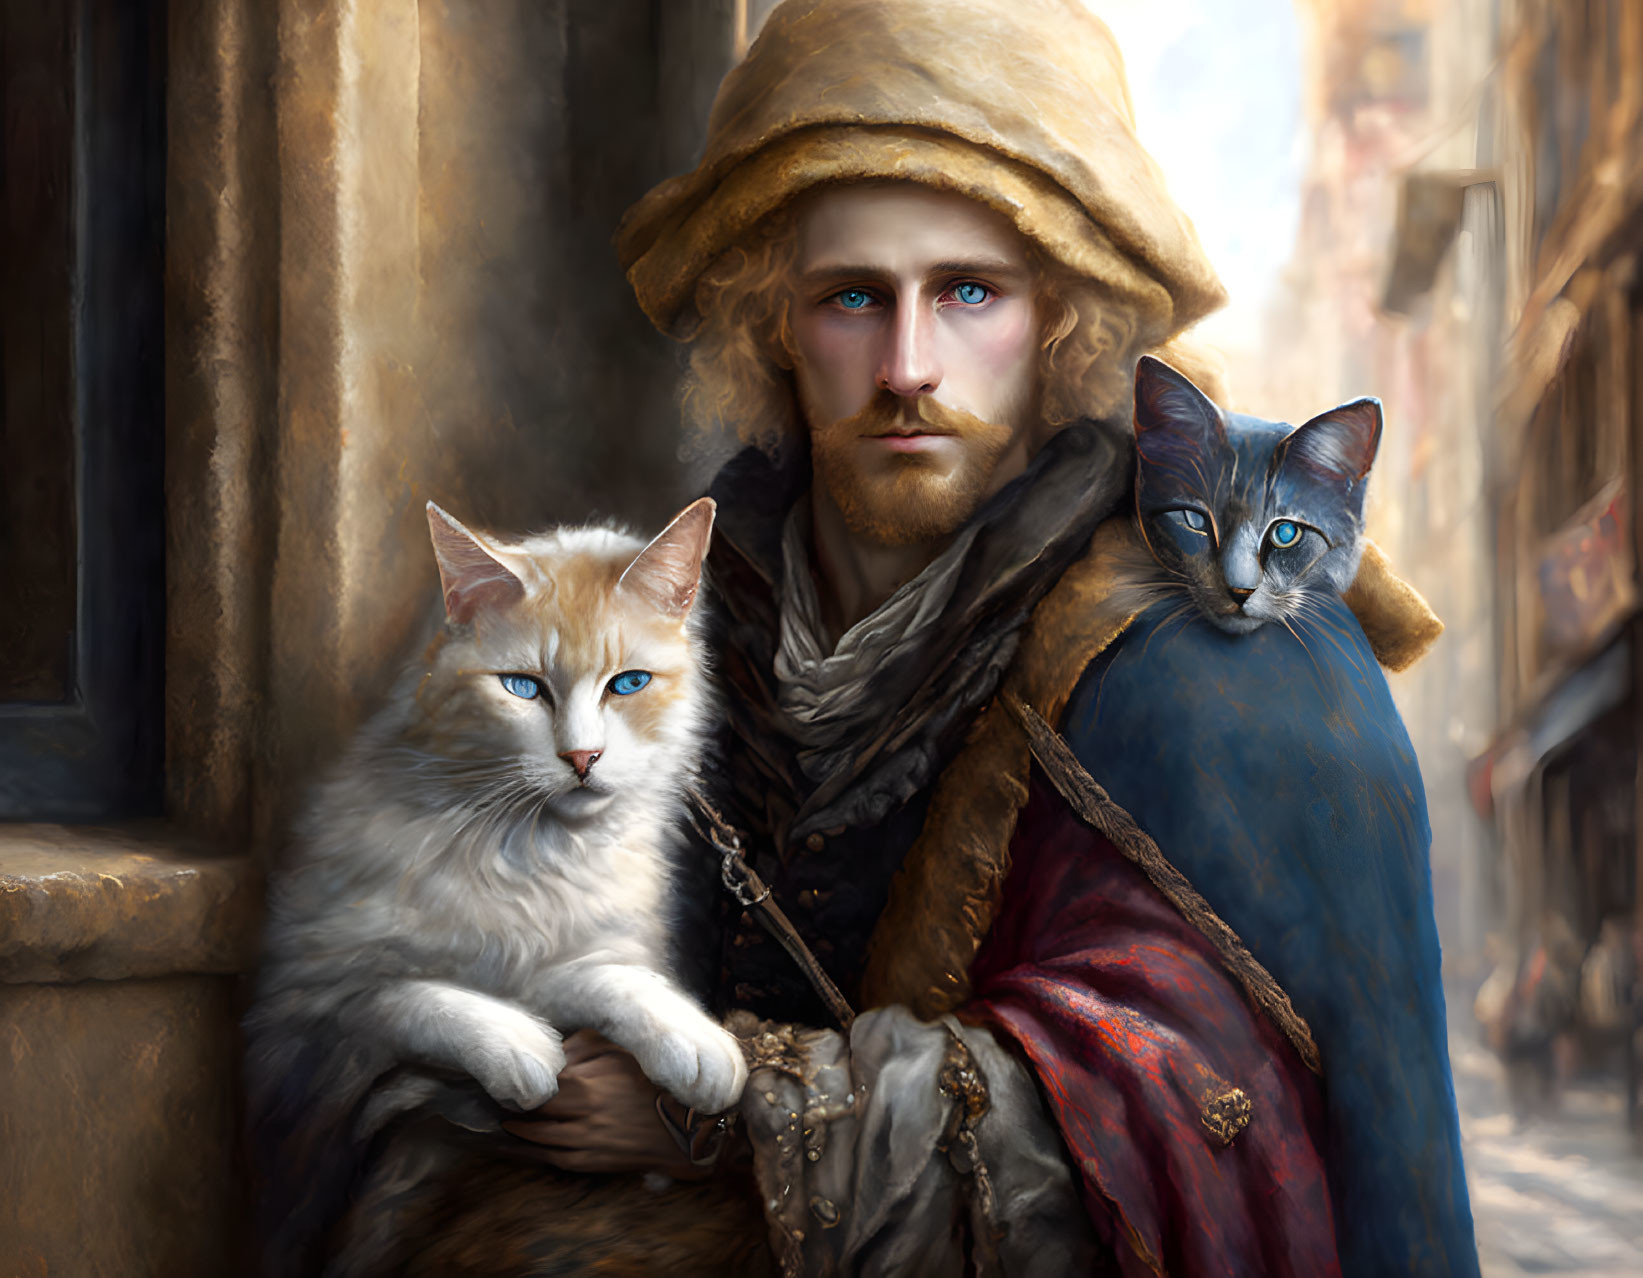 The Catman (Rembrandt)